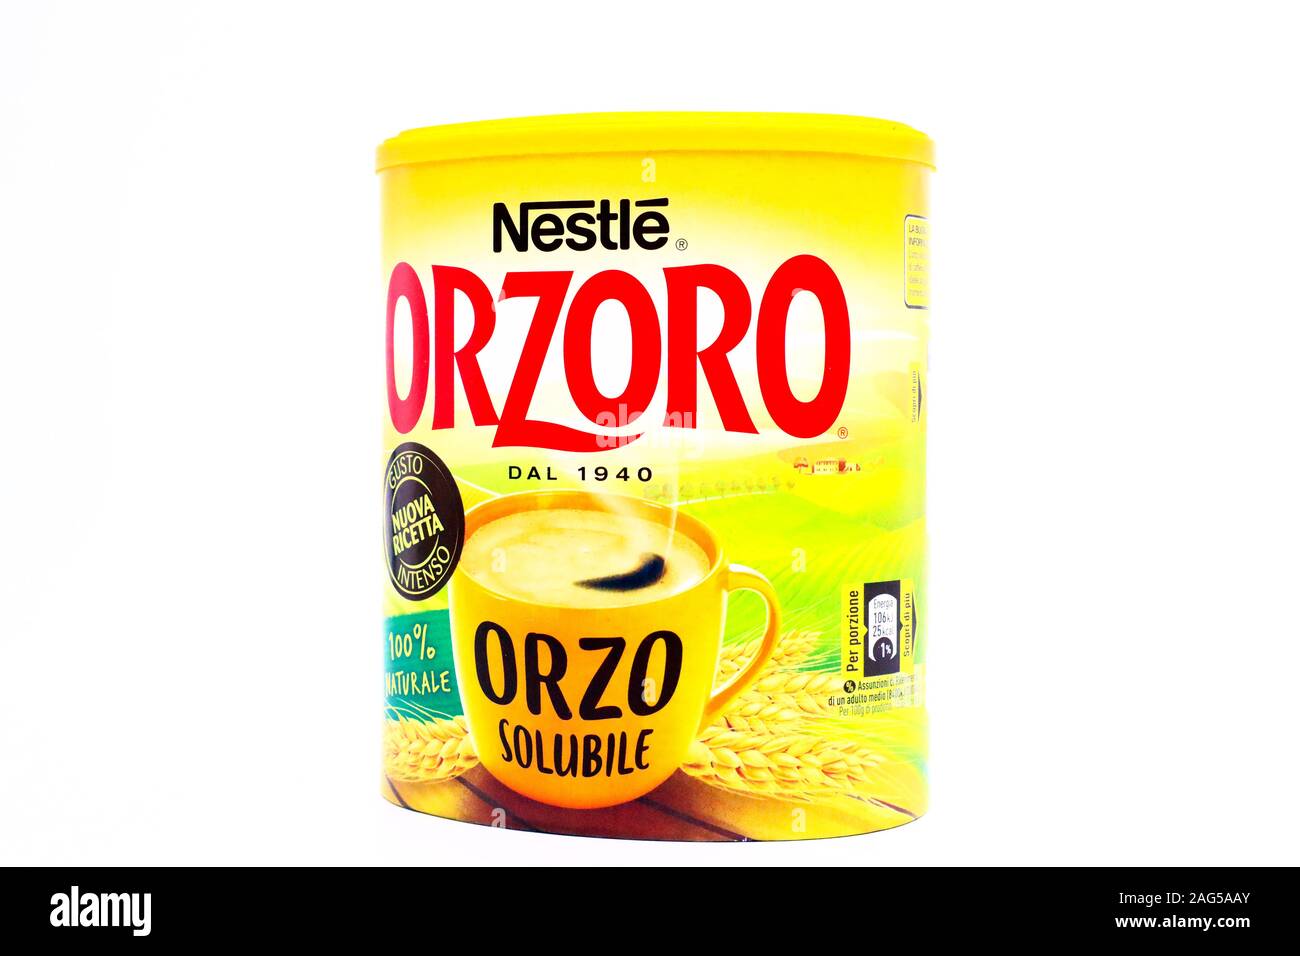 Orzoro Nestlé Instant Soluble Barley Stock Photo - Alamy